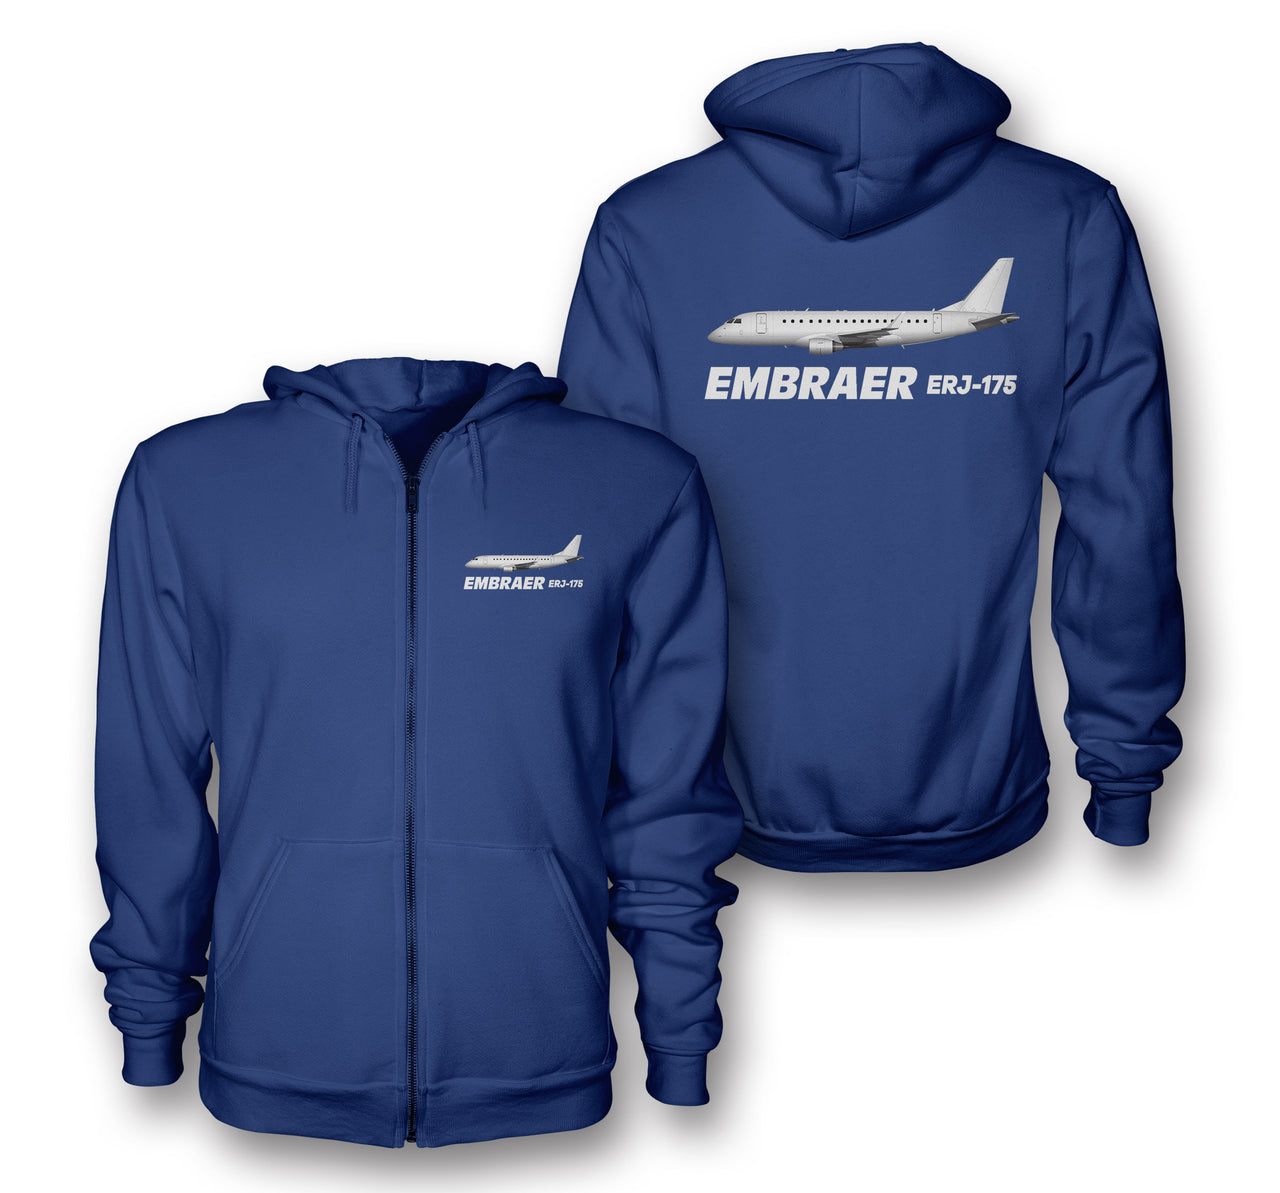 The Embraer ERJ-175 Designed Zipped Hoodies